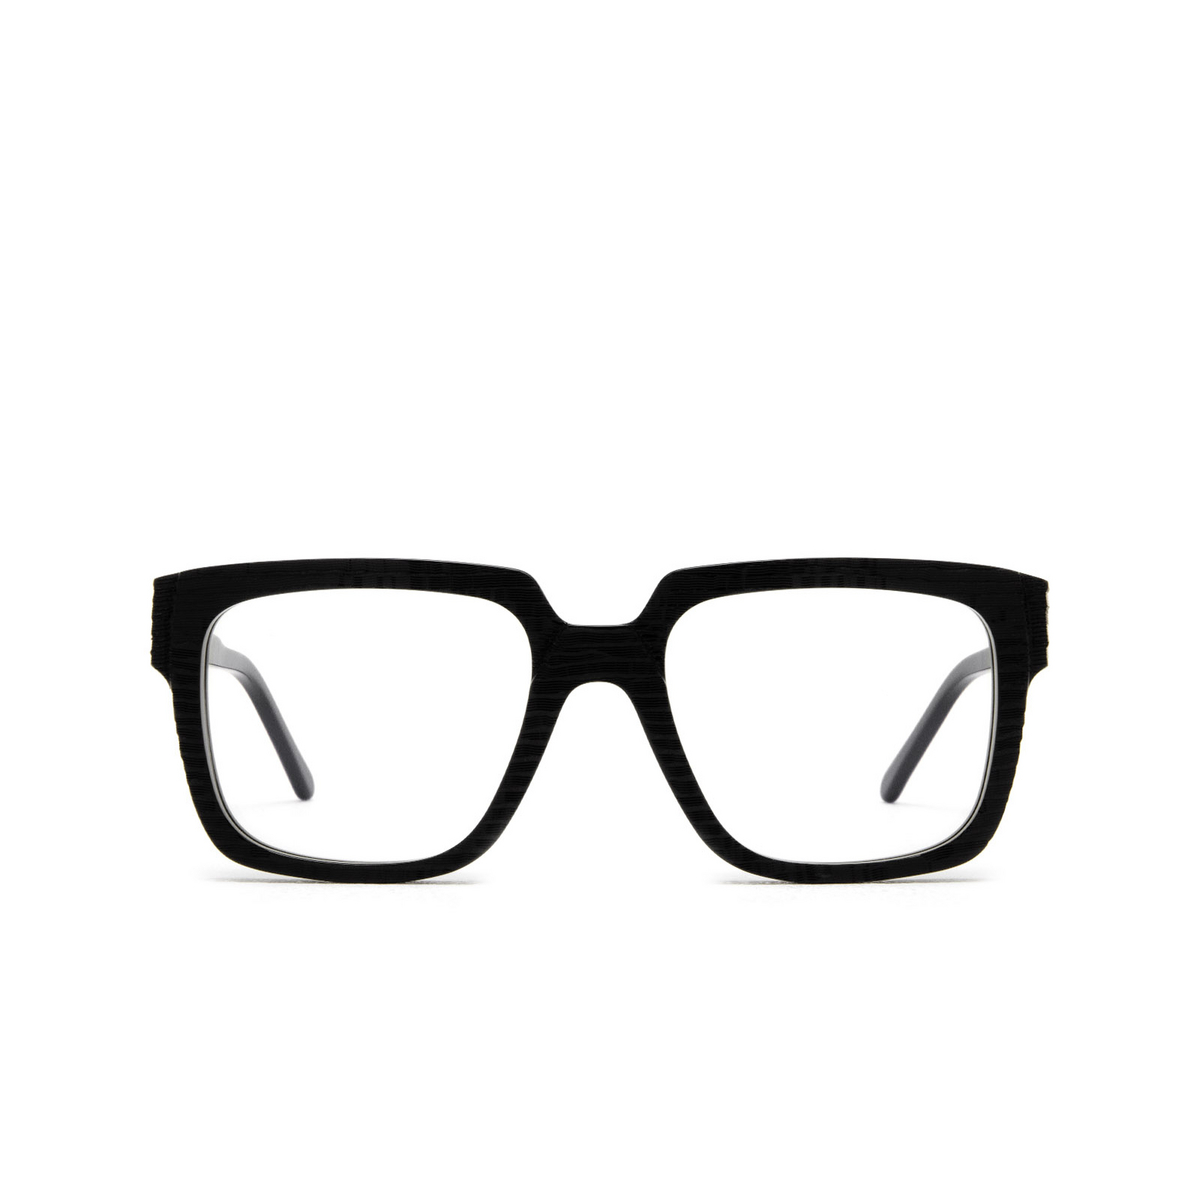 Kuboraum K3 Eyeglasses BS NT Black Shine & Handcraft Finishing - 1/4